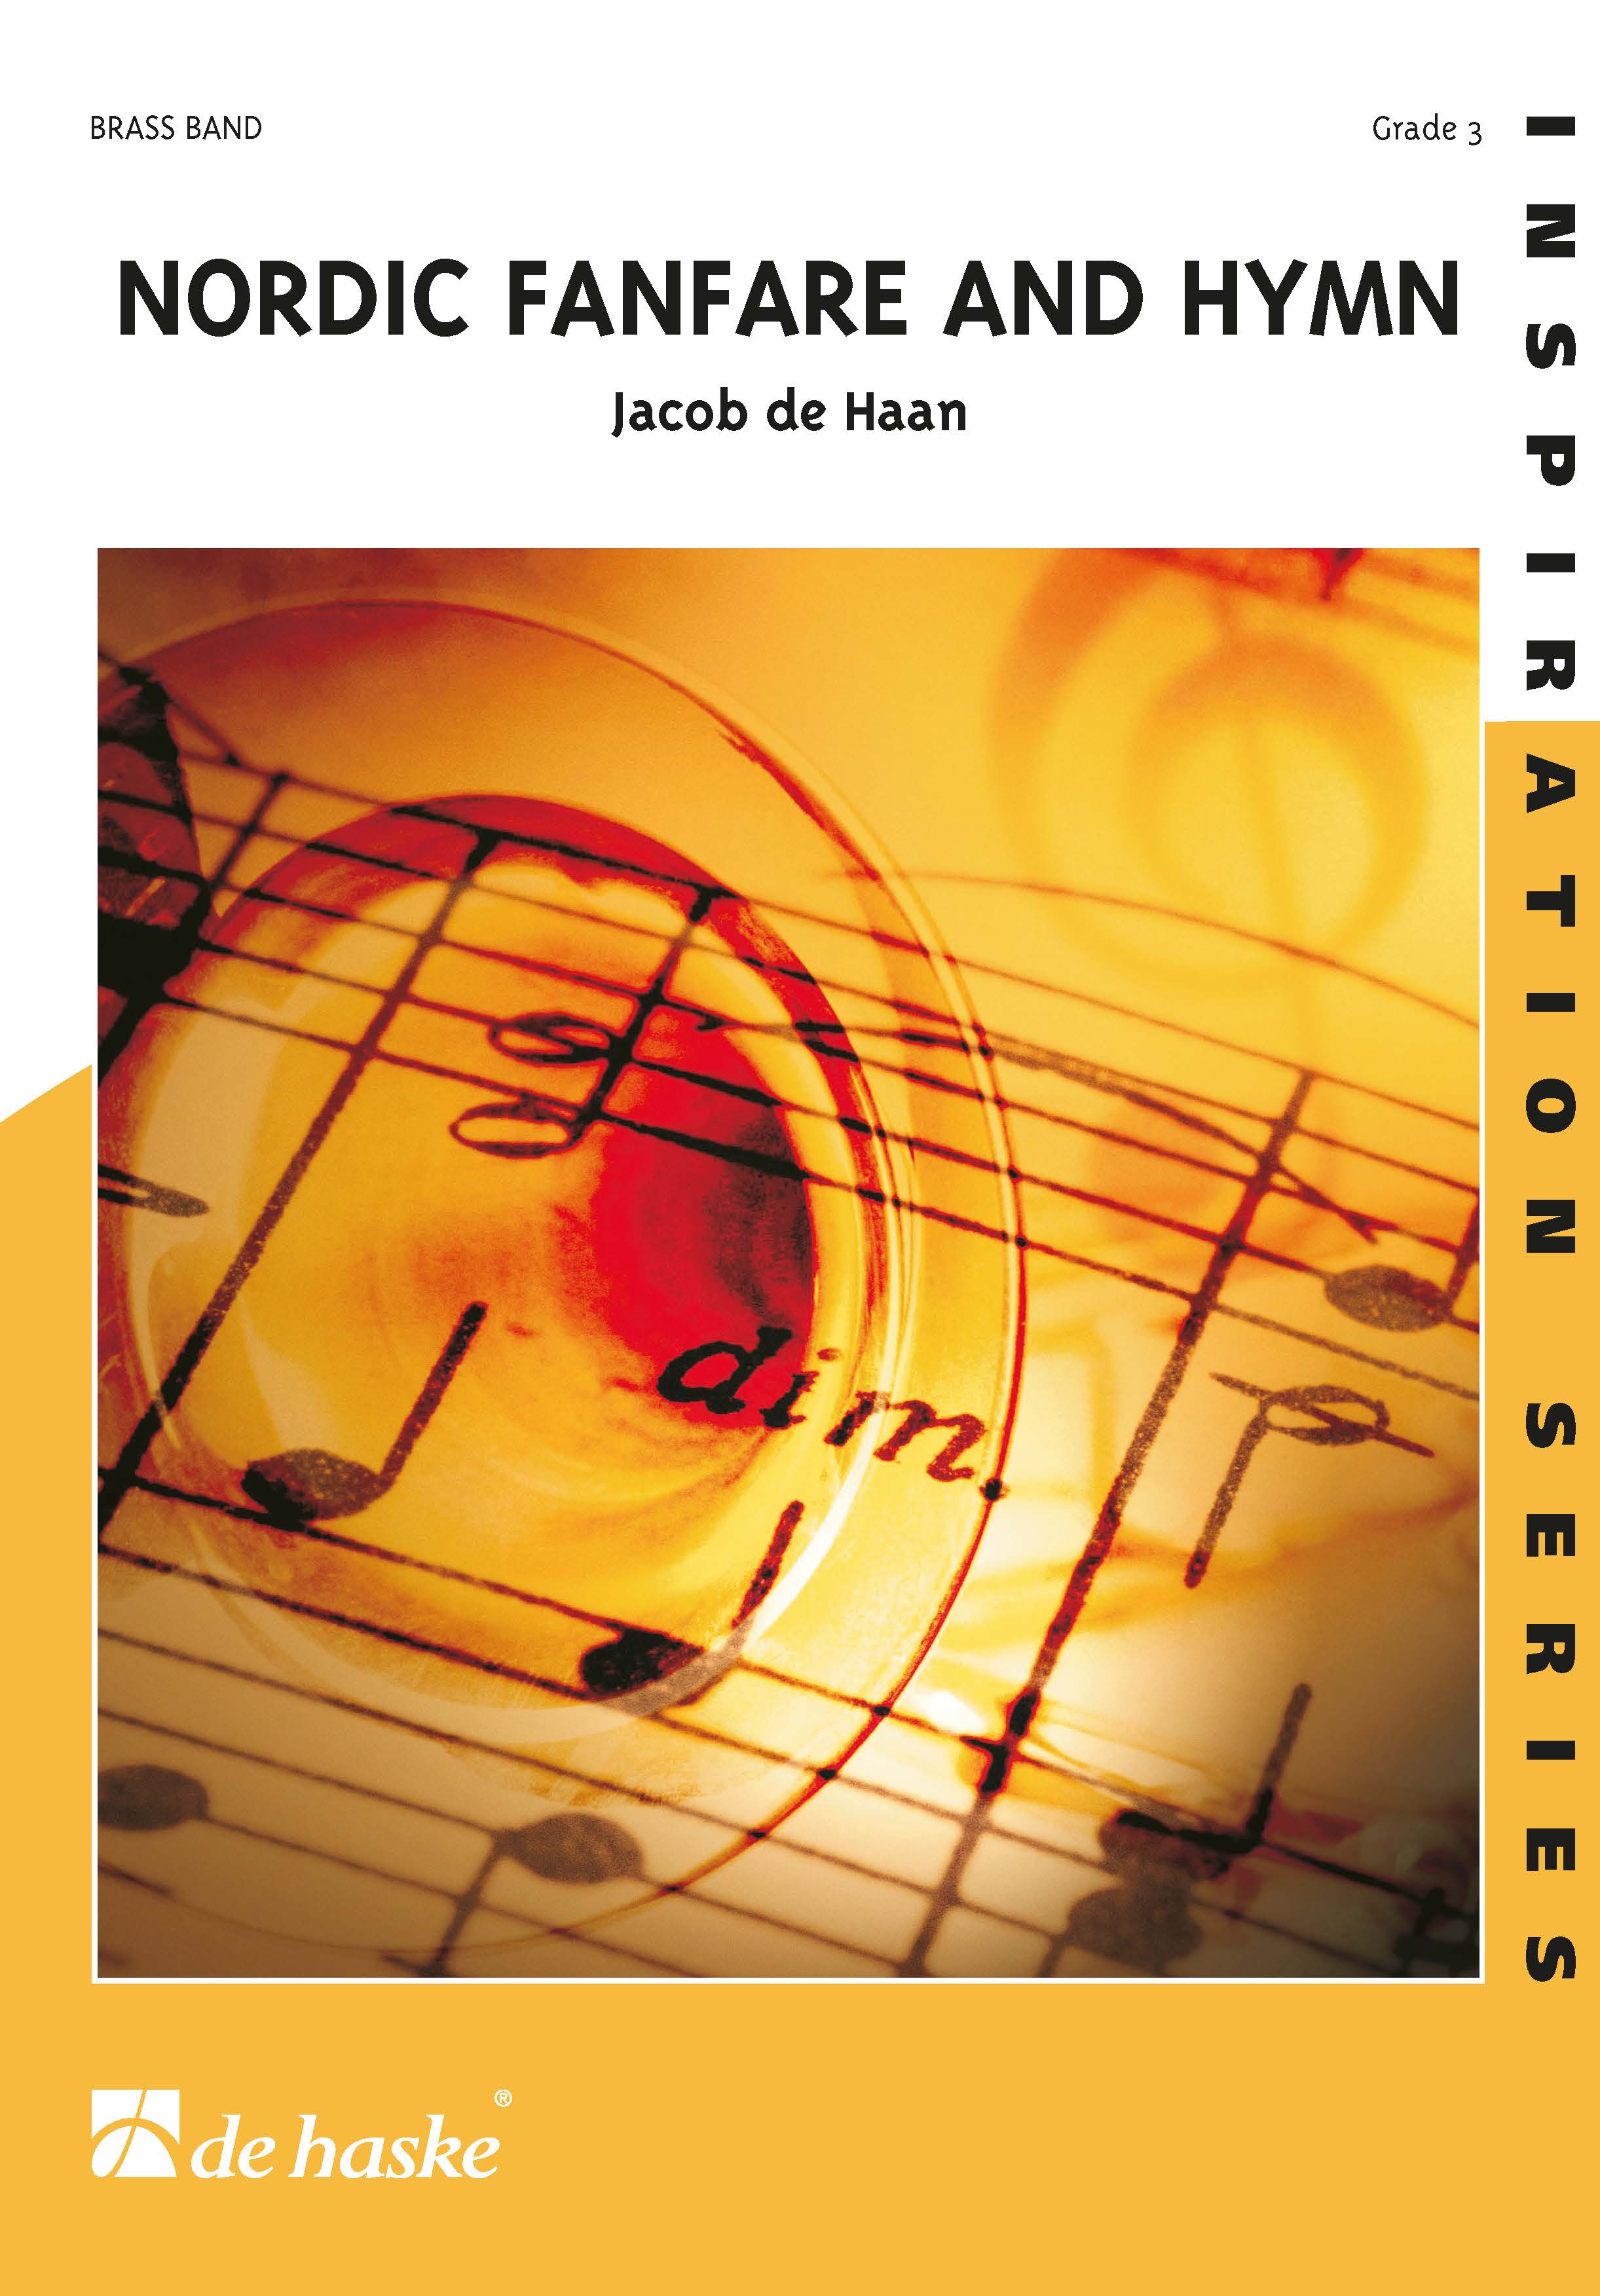 Jacob de Haan: Nordic Fanfare and Hymn: Brass Band: Score & Parts